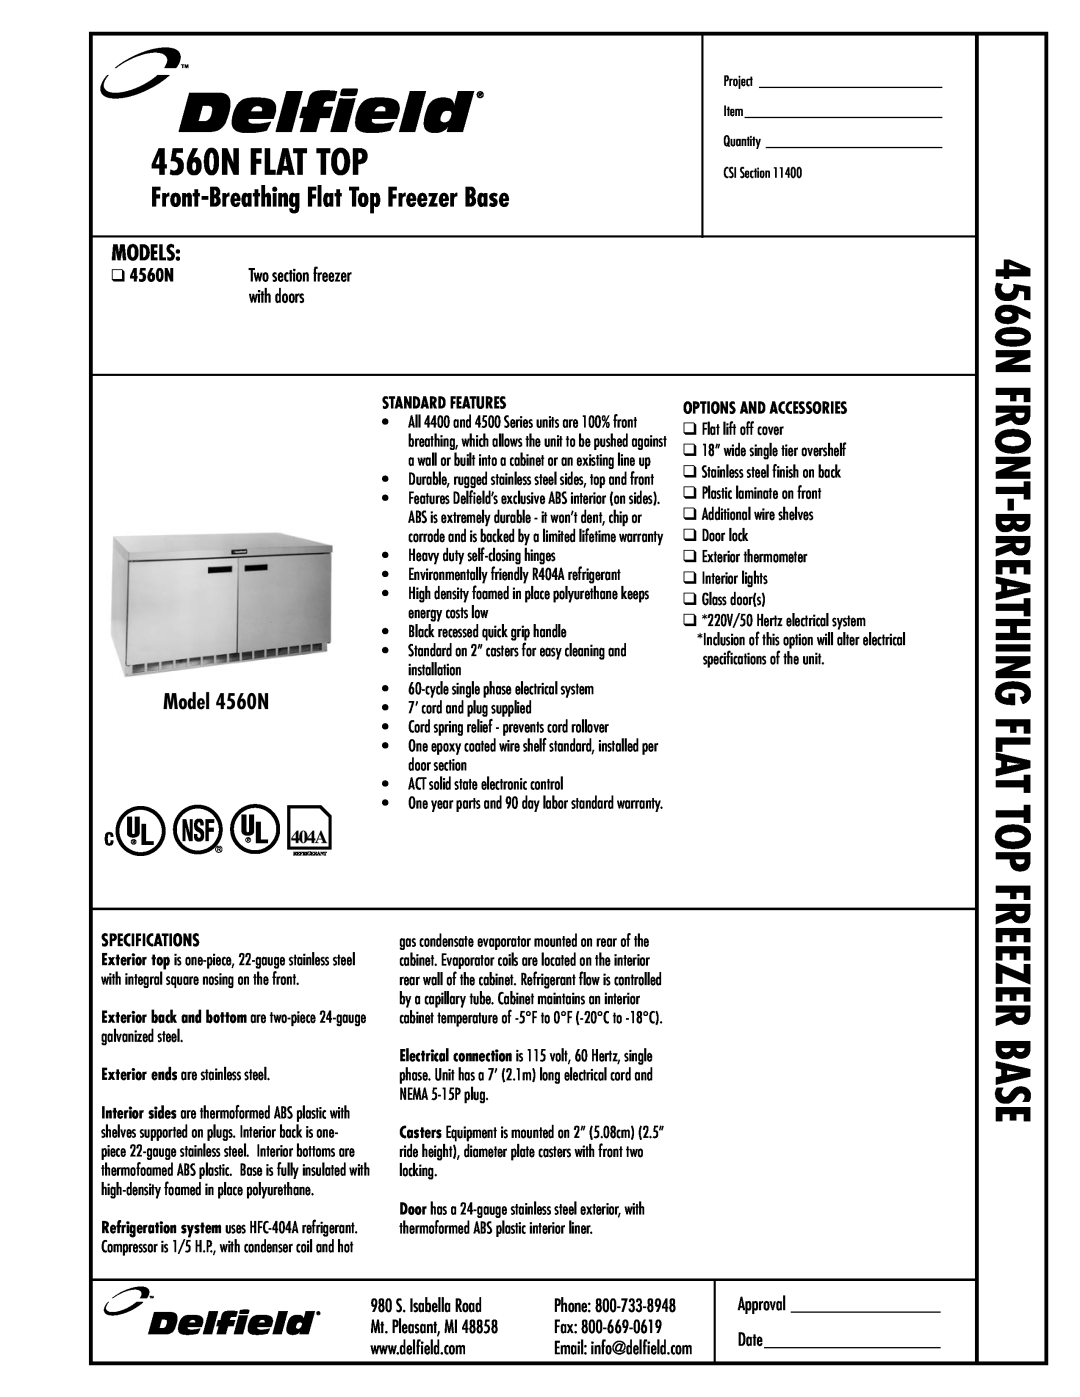 Delfield specifications Front-BreathingFlat Top Freezer Base, 4560N FLAT TOP, Front-Breathingflat Top F, Models 